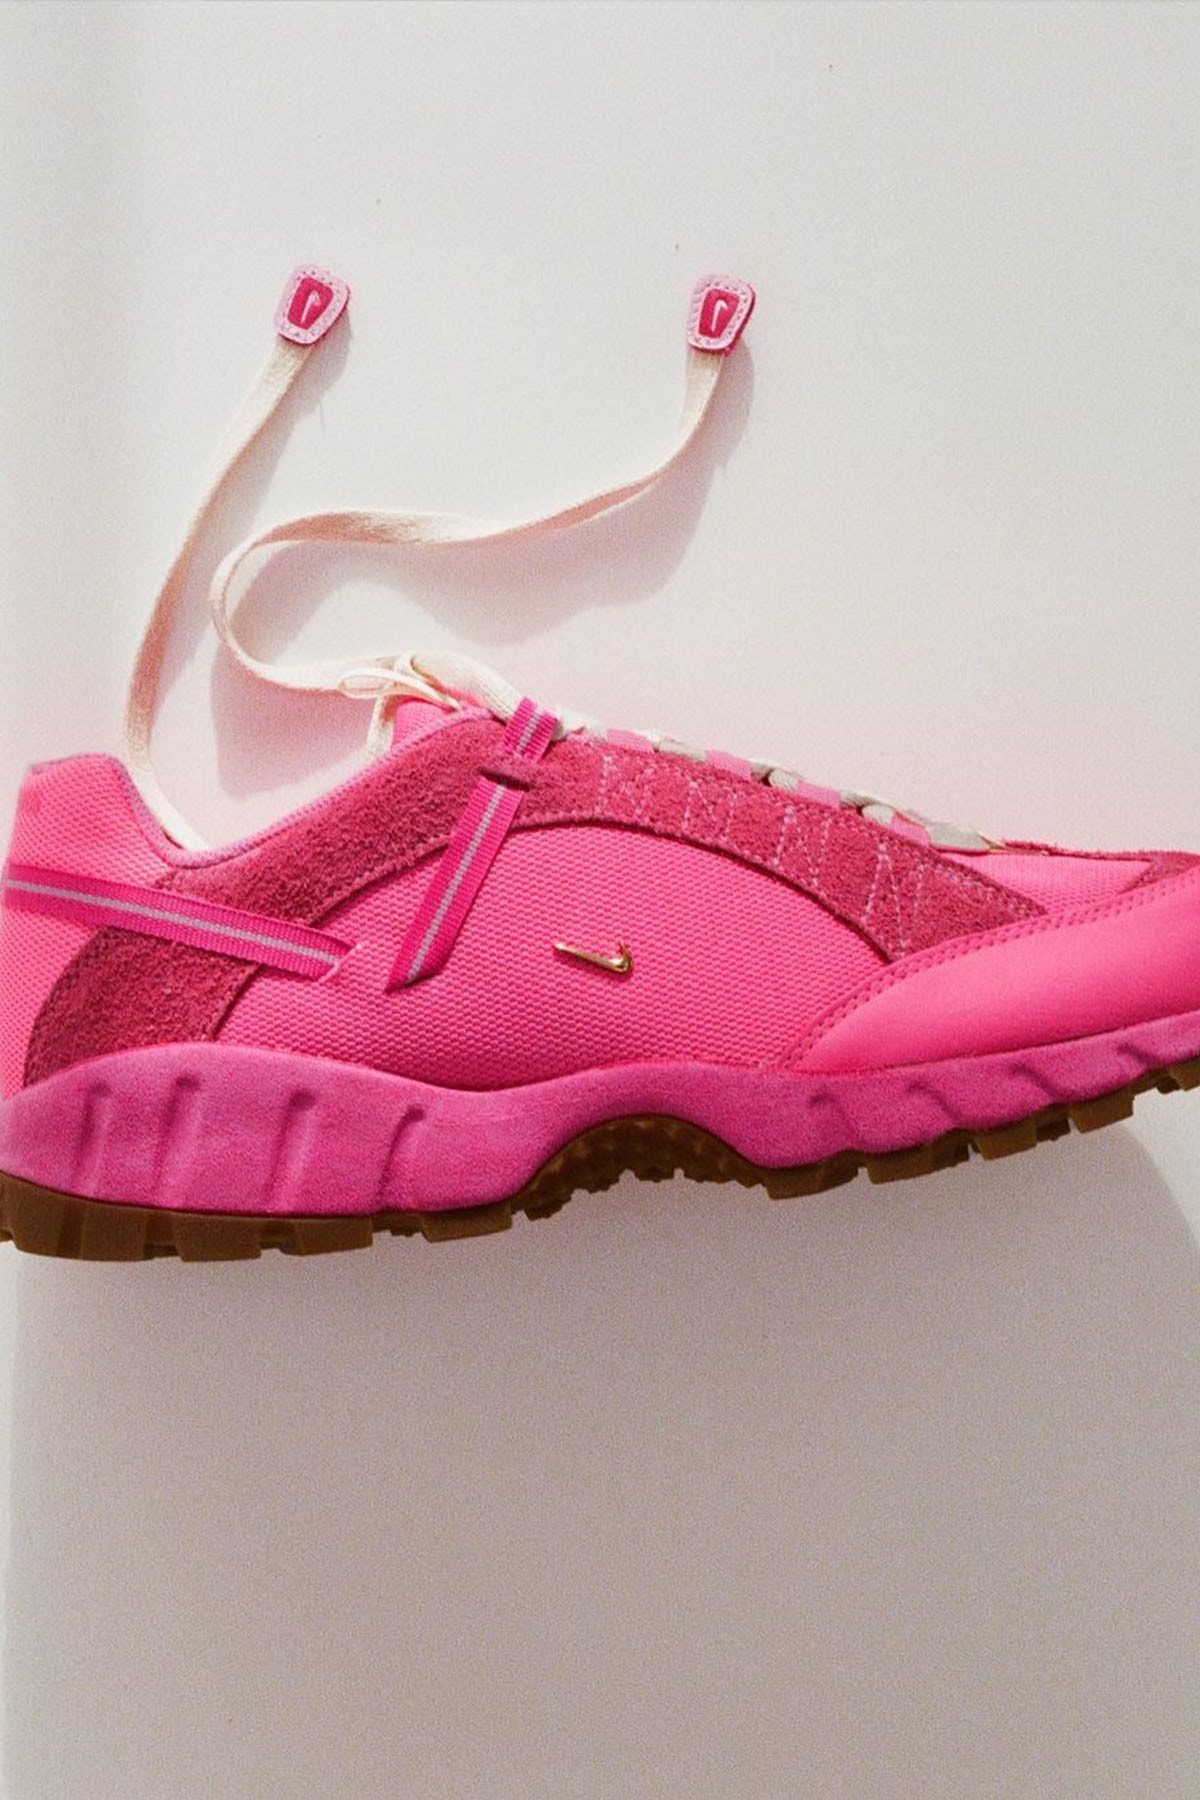 Jacquemus x Nike Humara 最新粉色聯乘鞋款正式登場